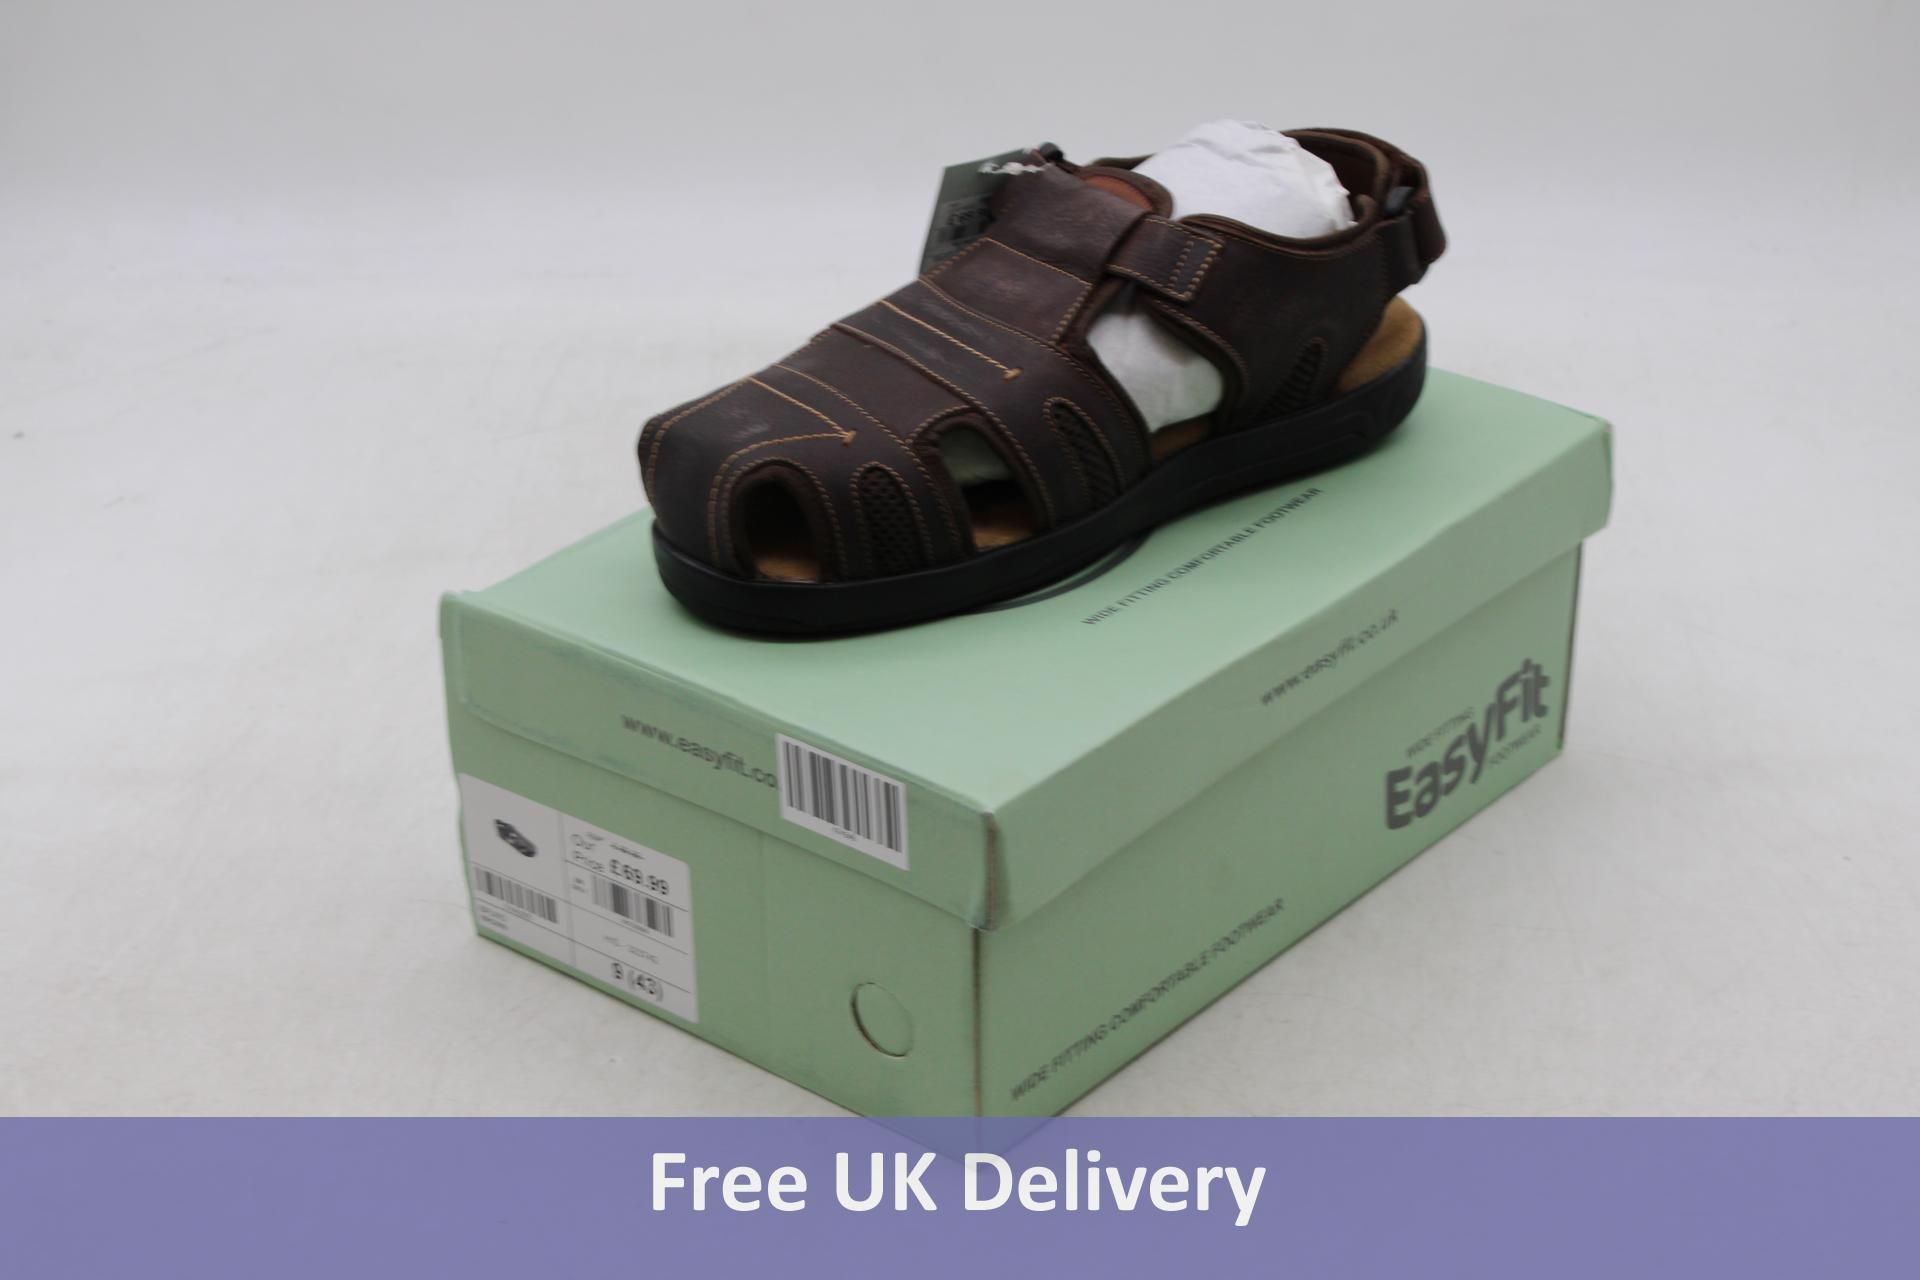 EasyFit Extra Wide Fit Fisherman's Sandals, Bruno Brown, UK 9